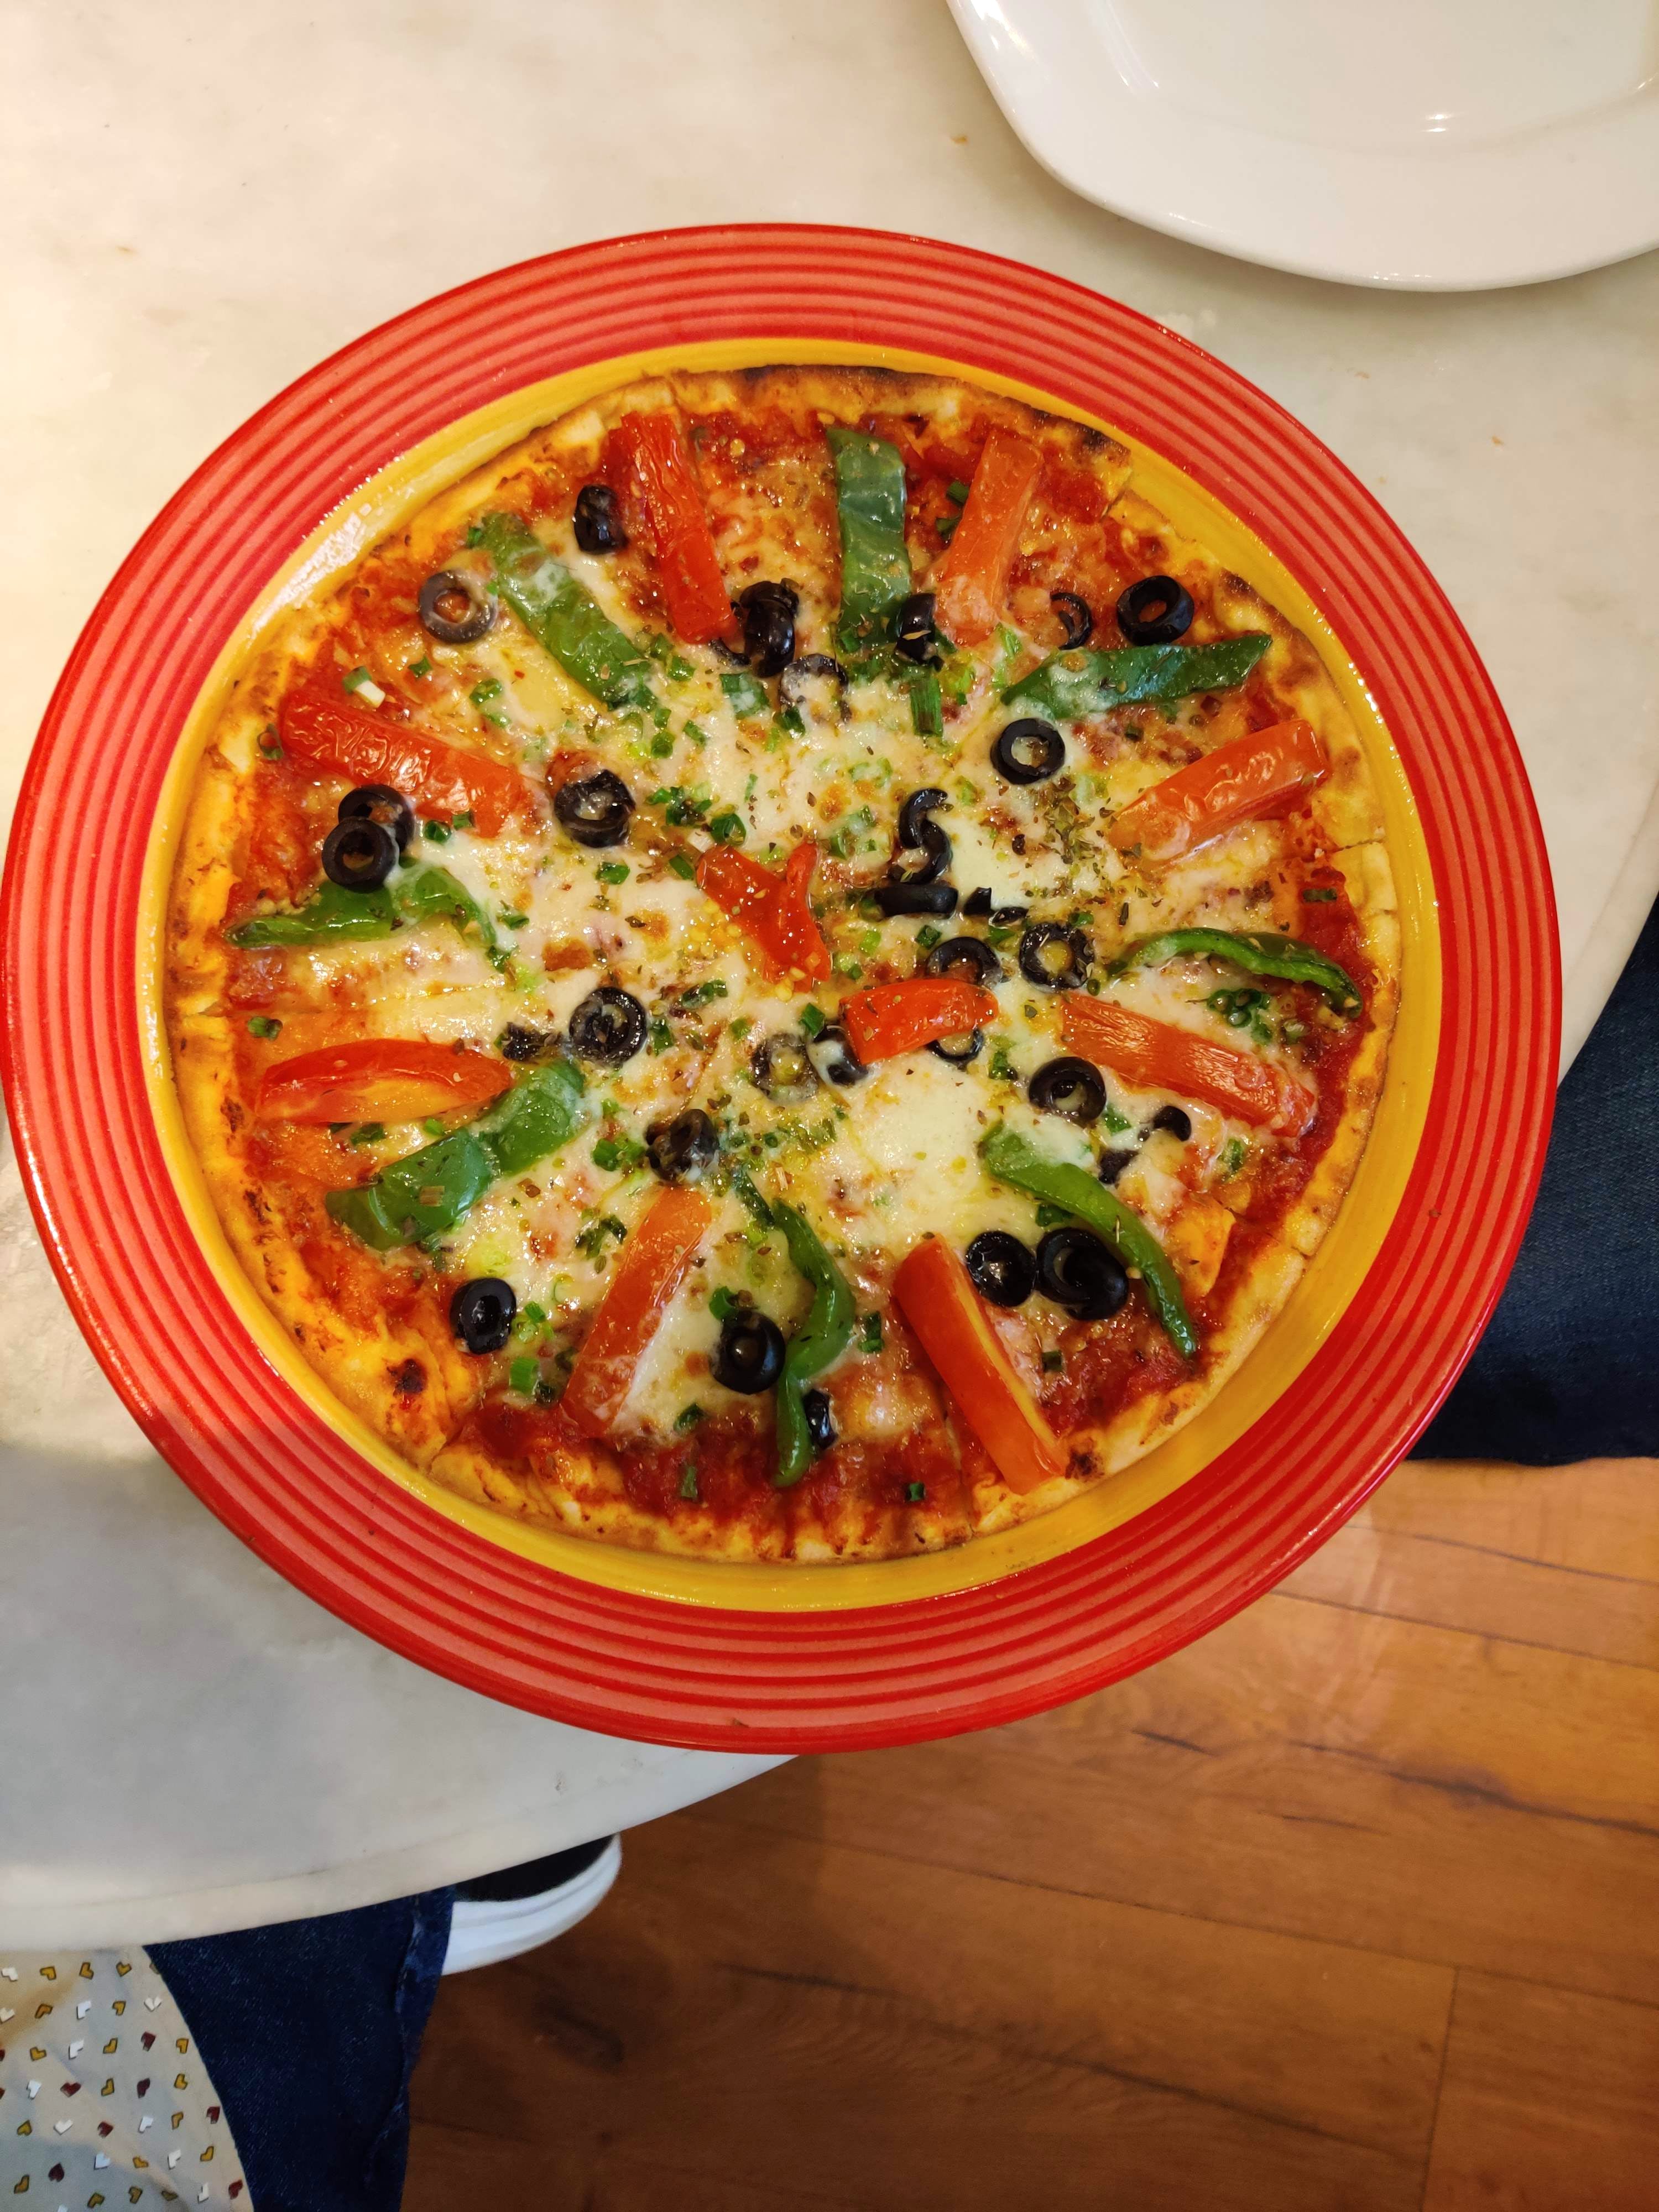 Dish,Food,Cuisine,Pizza,Pizza cheese,California-style pizza,Ingredient,Italian food,Comfort food,Recipe